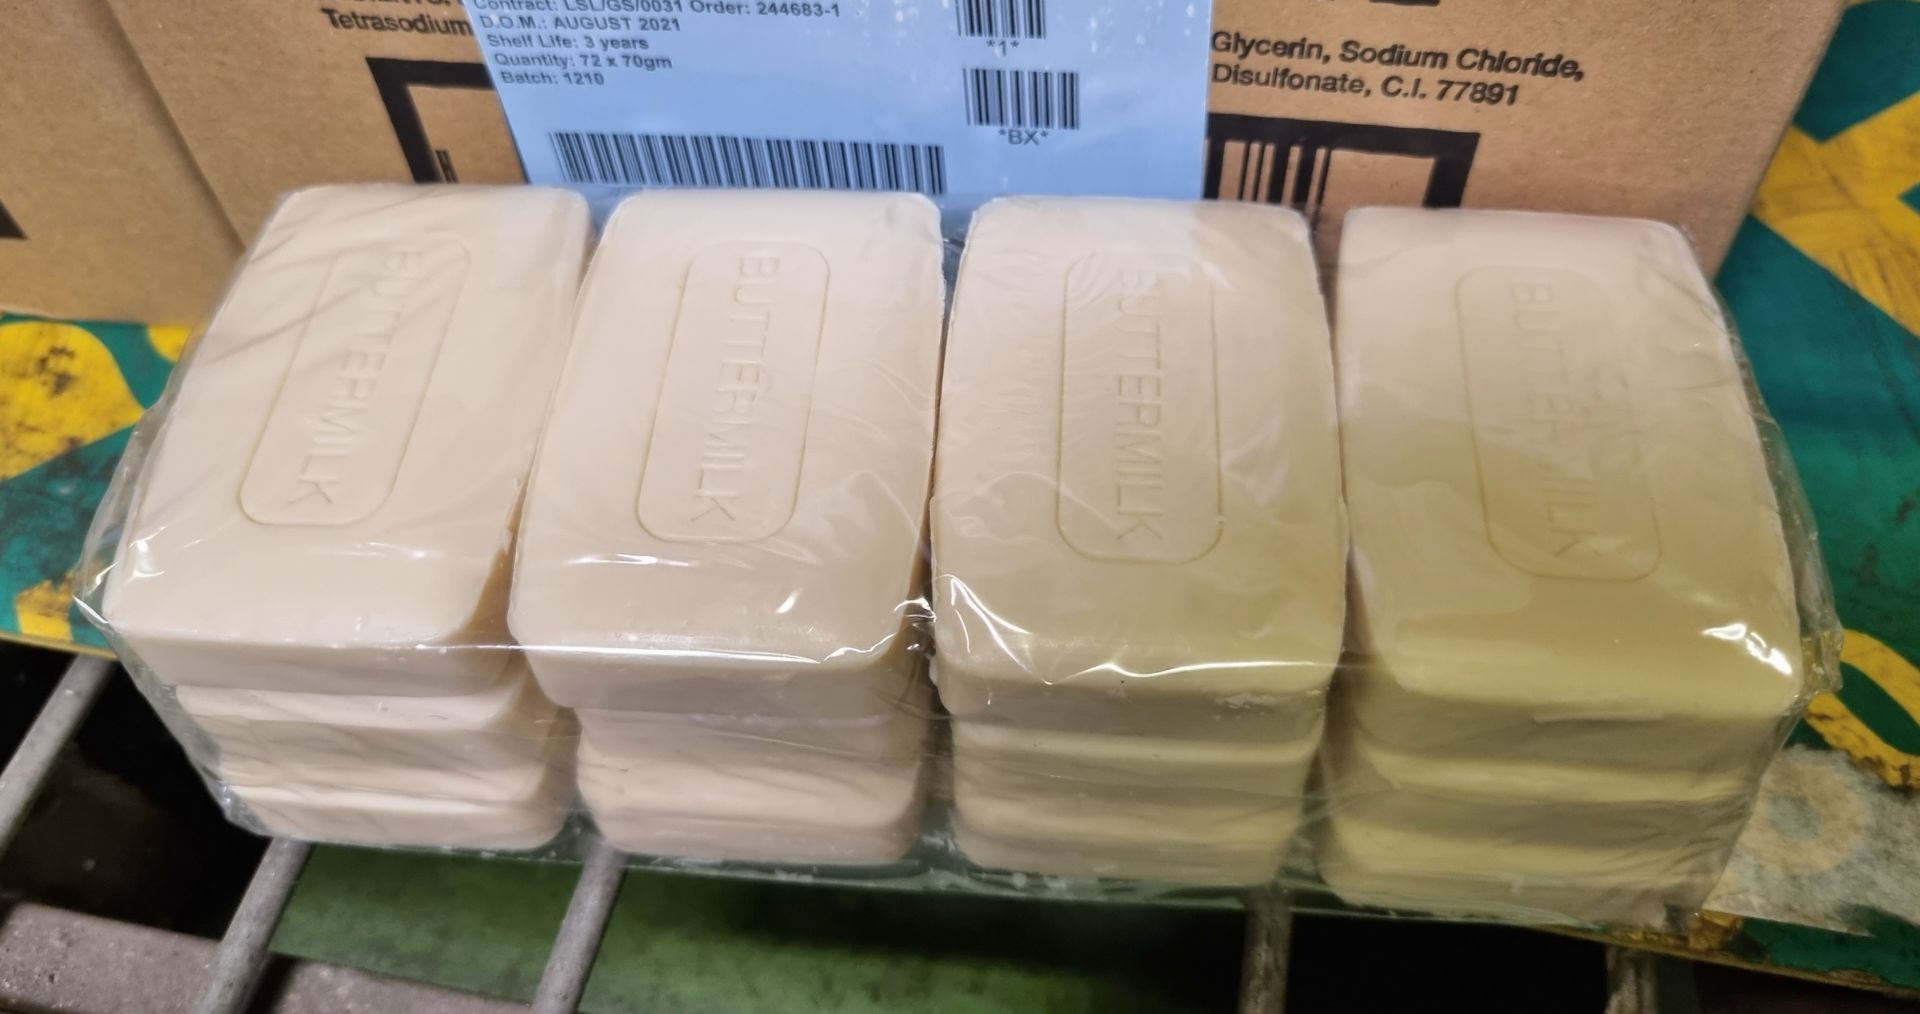 8x boxes of Buttermilk soap bar 70g - 72 units per box - Image 2 of 2